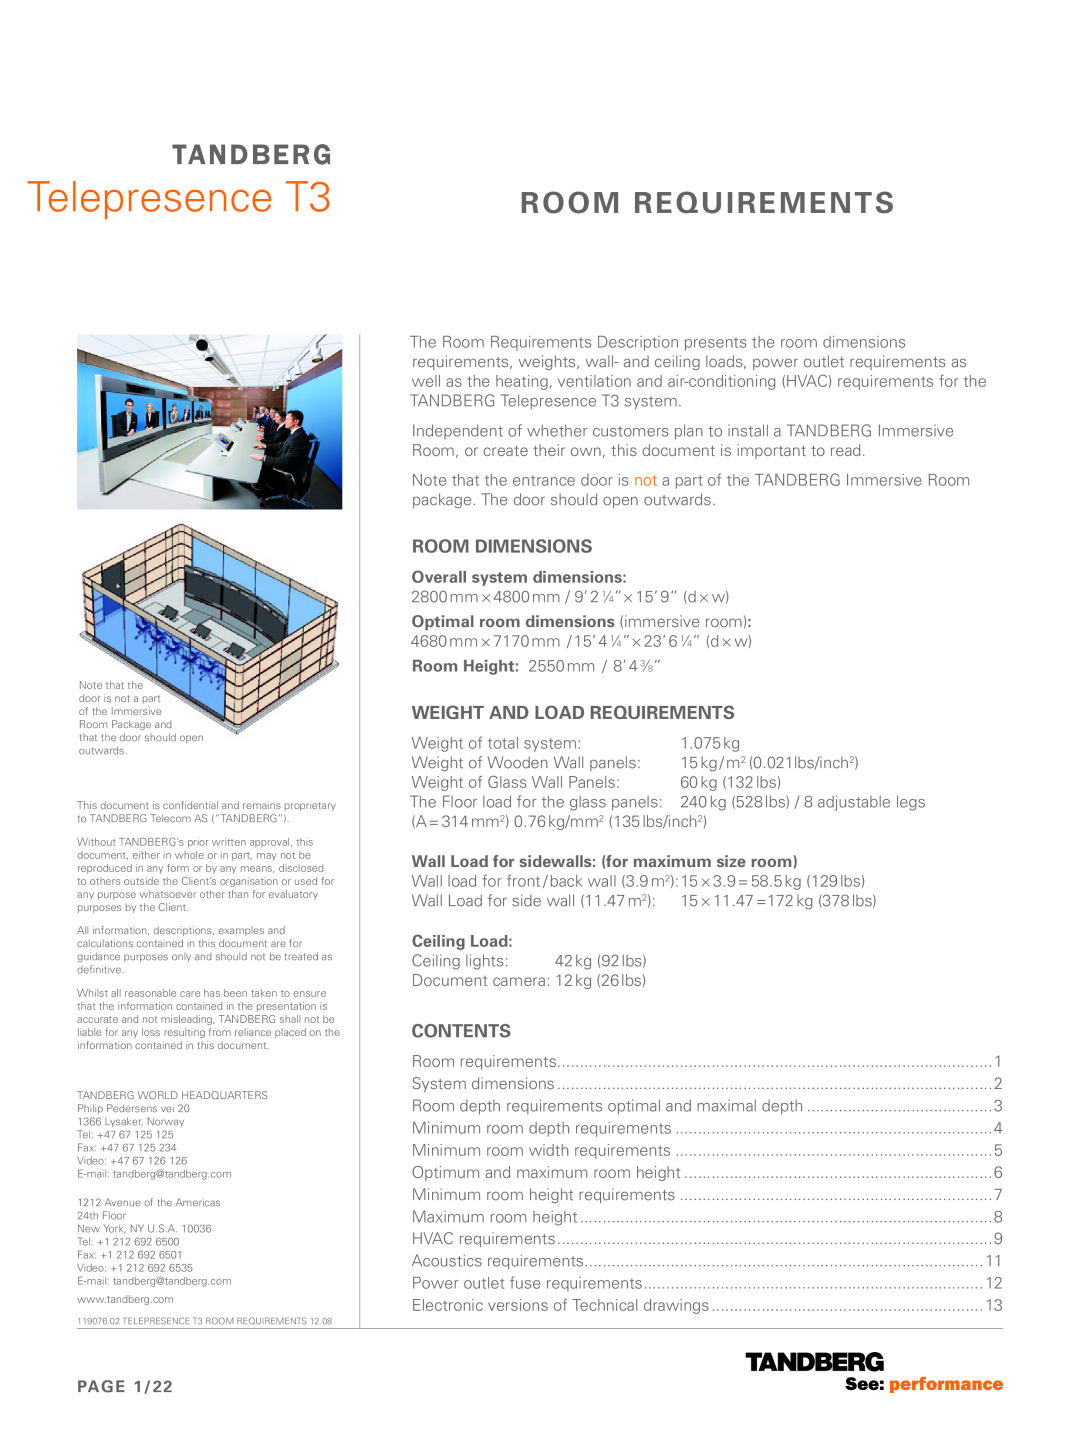 TANDBERG 119076.02 dimensions Room Requirements, Room dimensions, Weight and load requirements, contents, Ceiling Load 